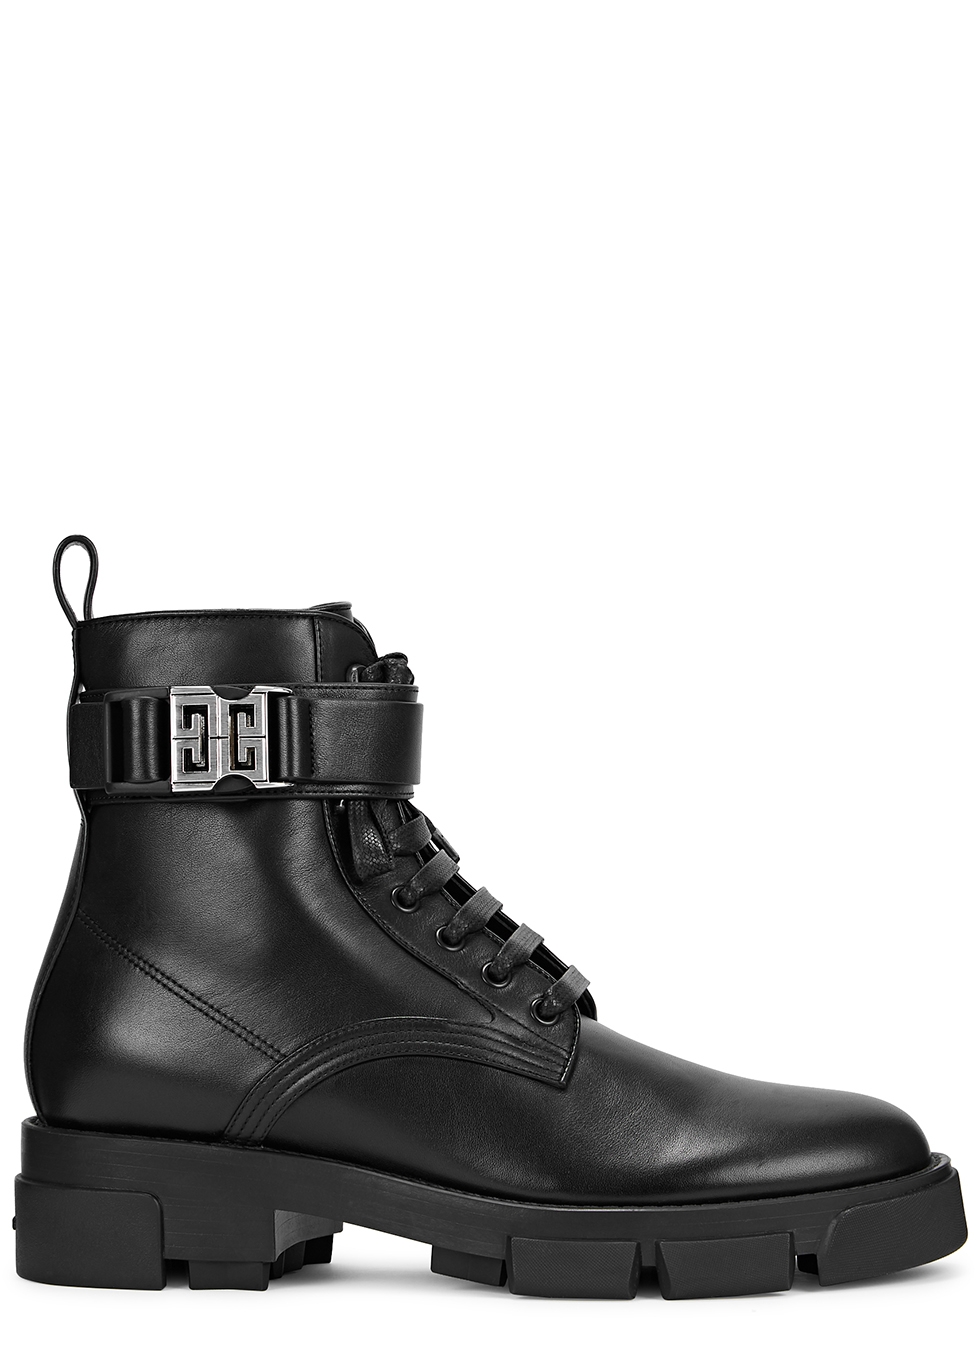 Terra black leather combat boots